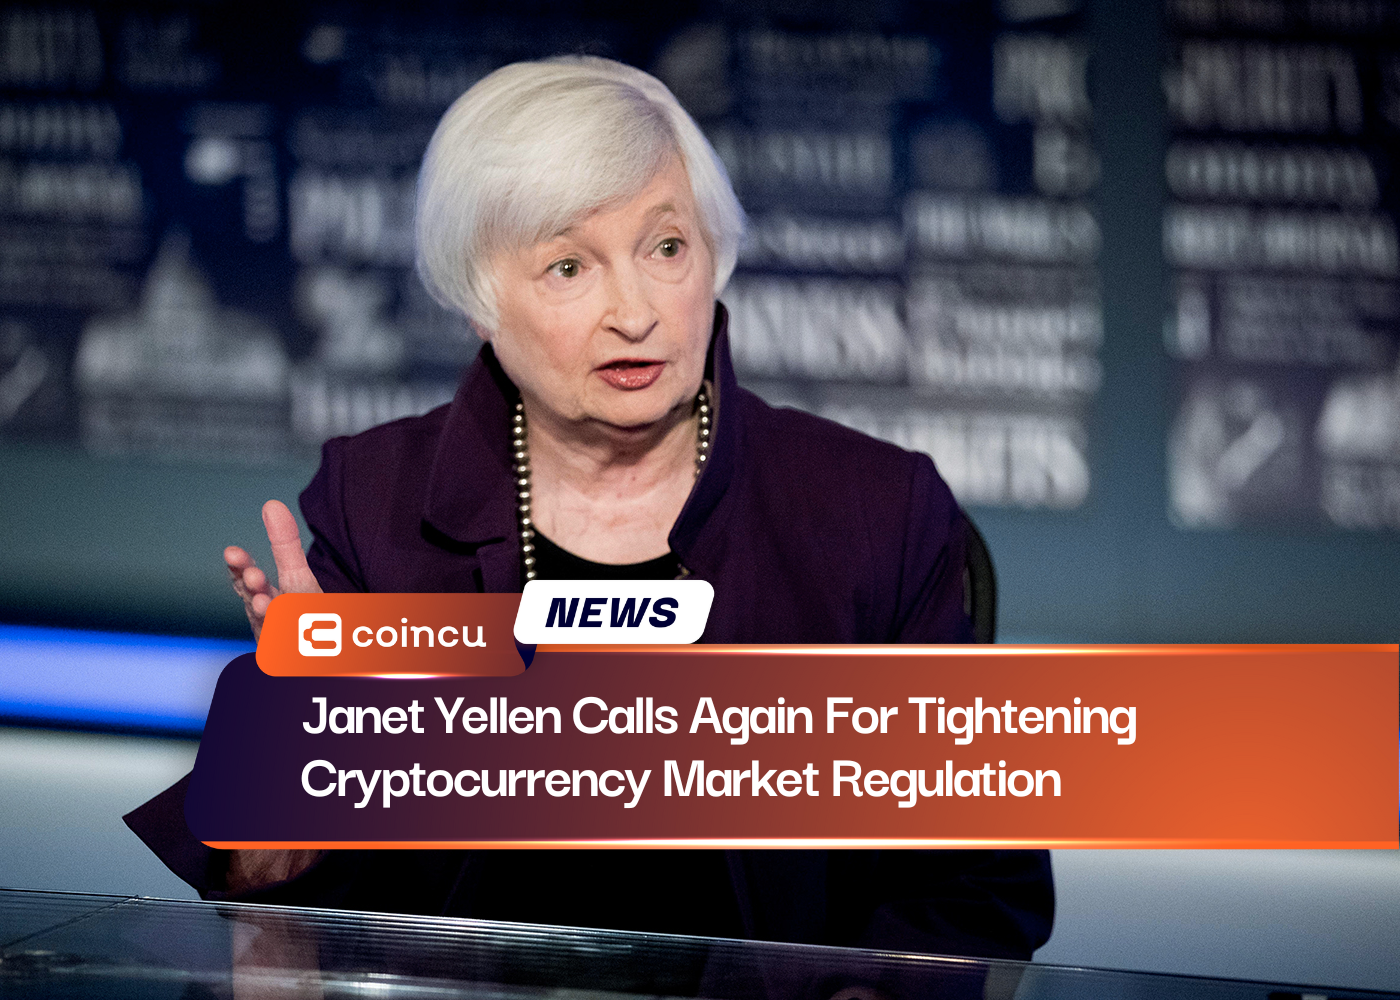 Janet Yellen Calls Again For Tightening Cryptocurrency Market Regulation